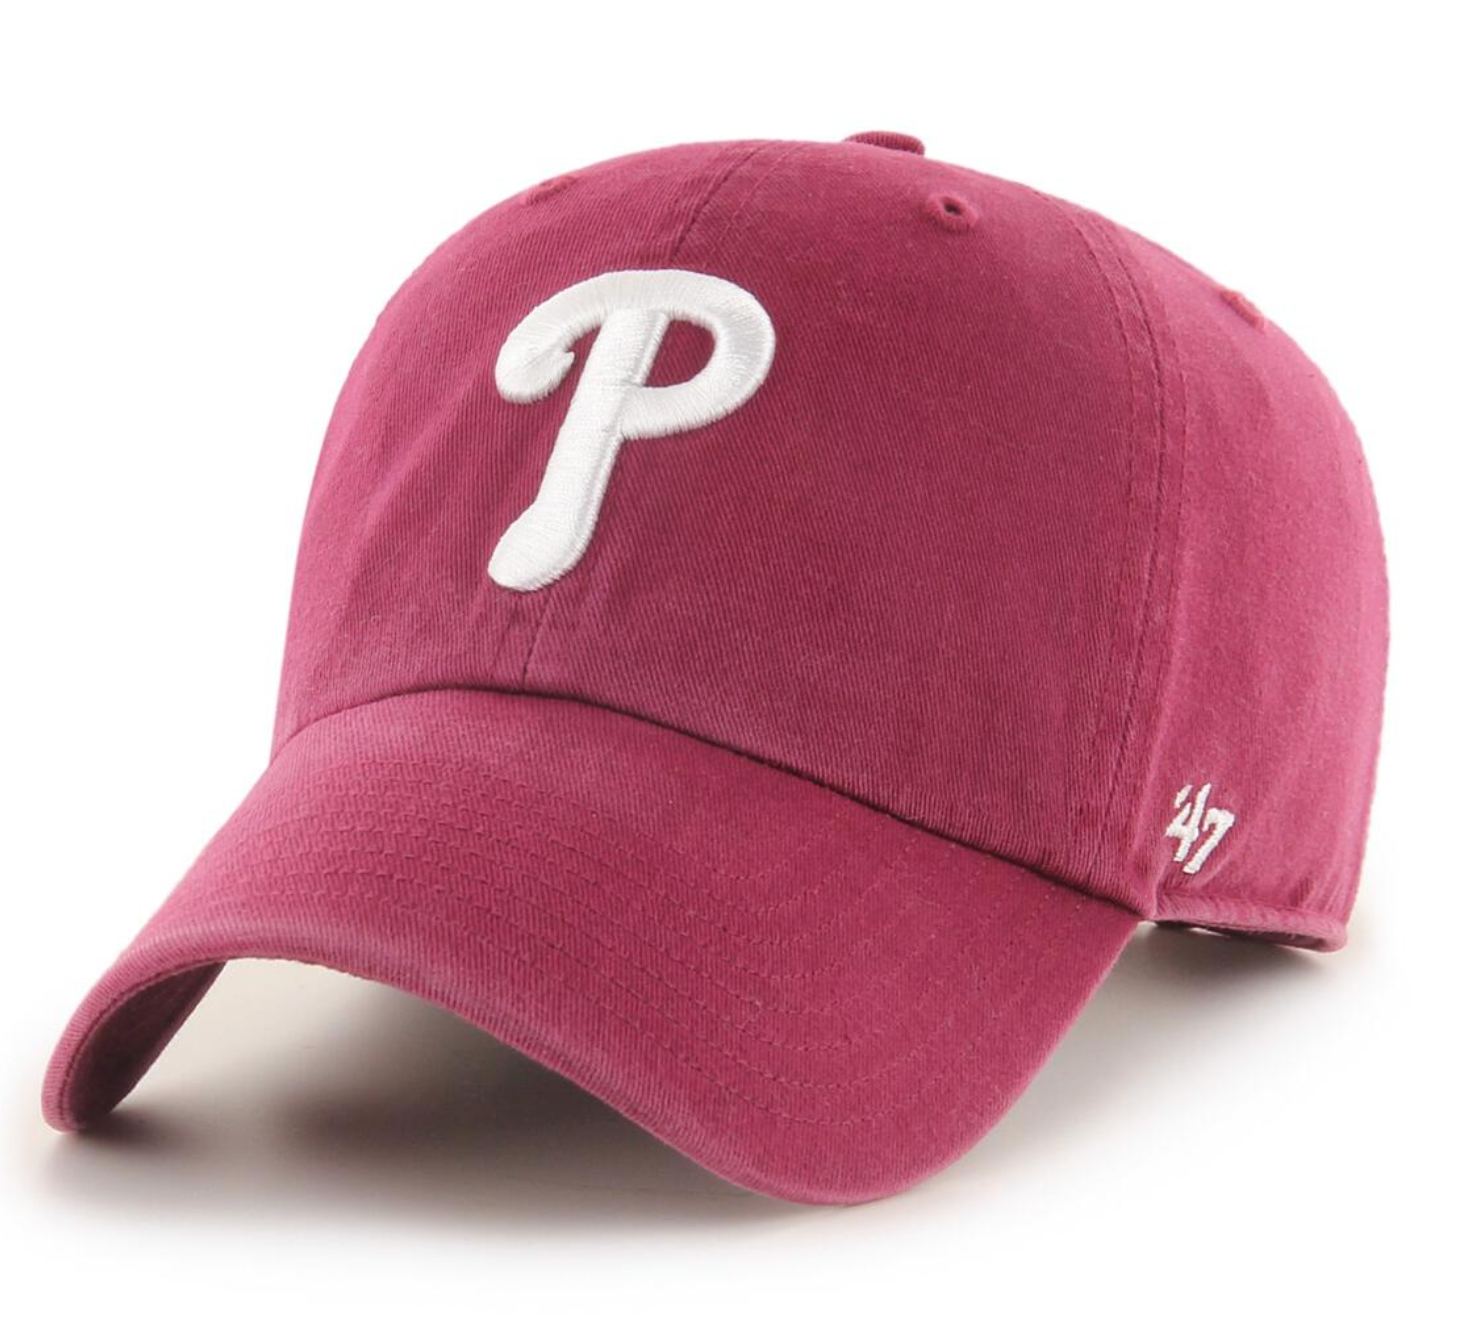 '47 Brand Unisex Philadelphia Phillies Cap - Cardinal